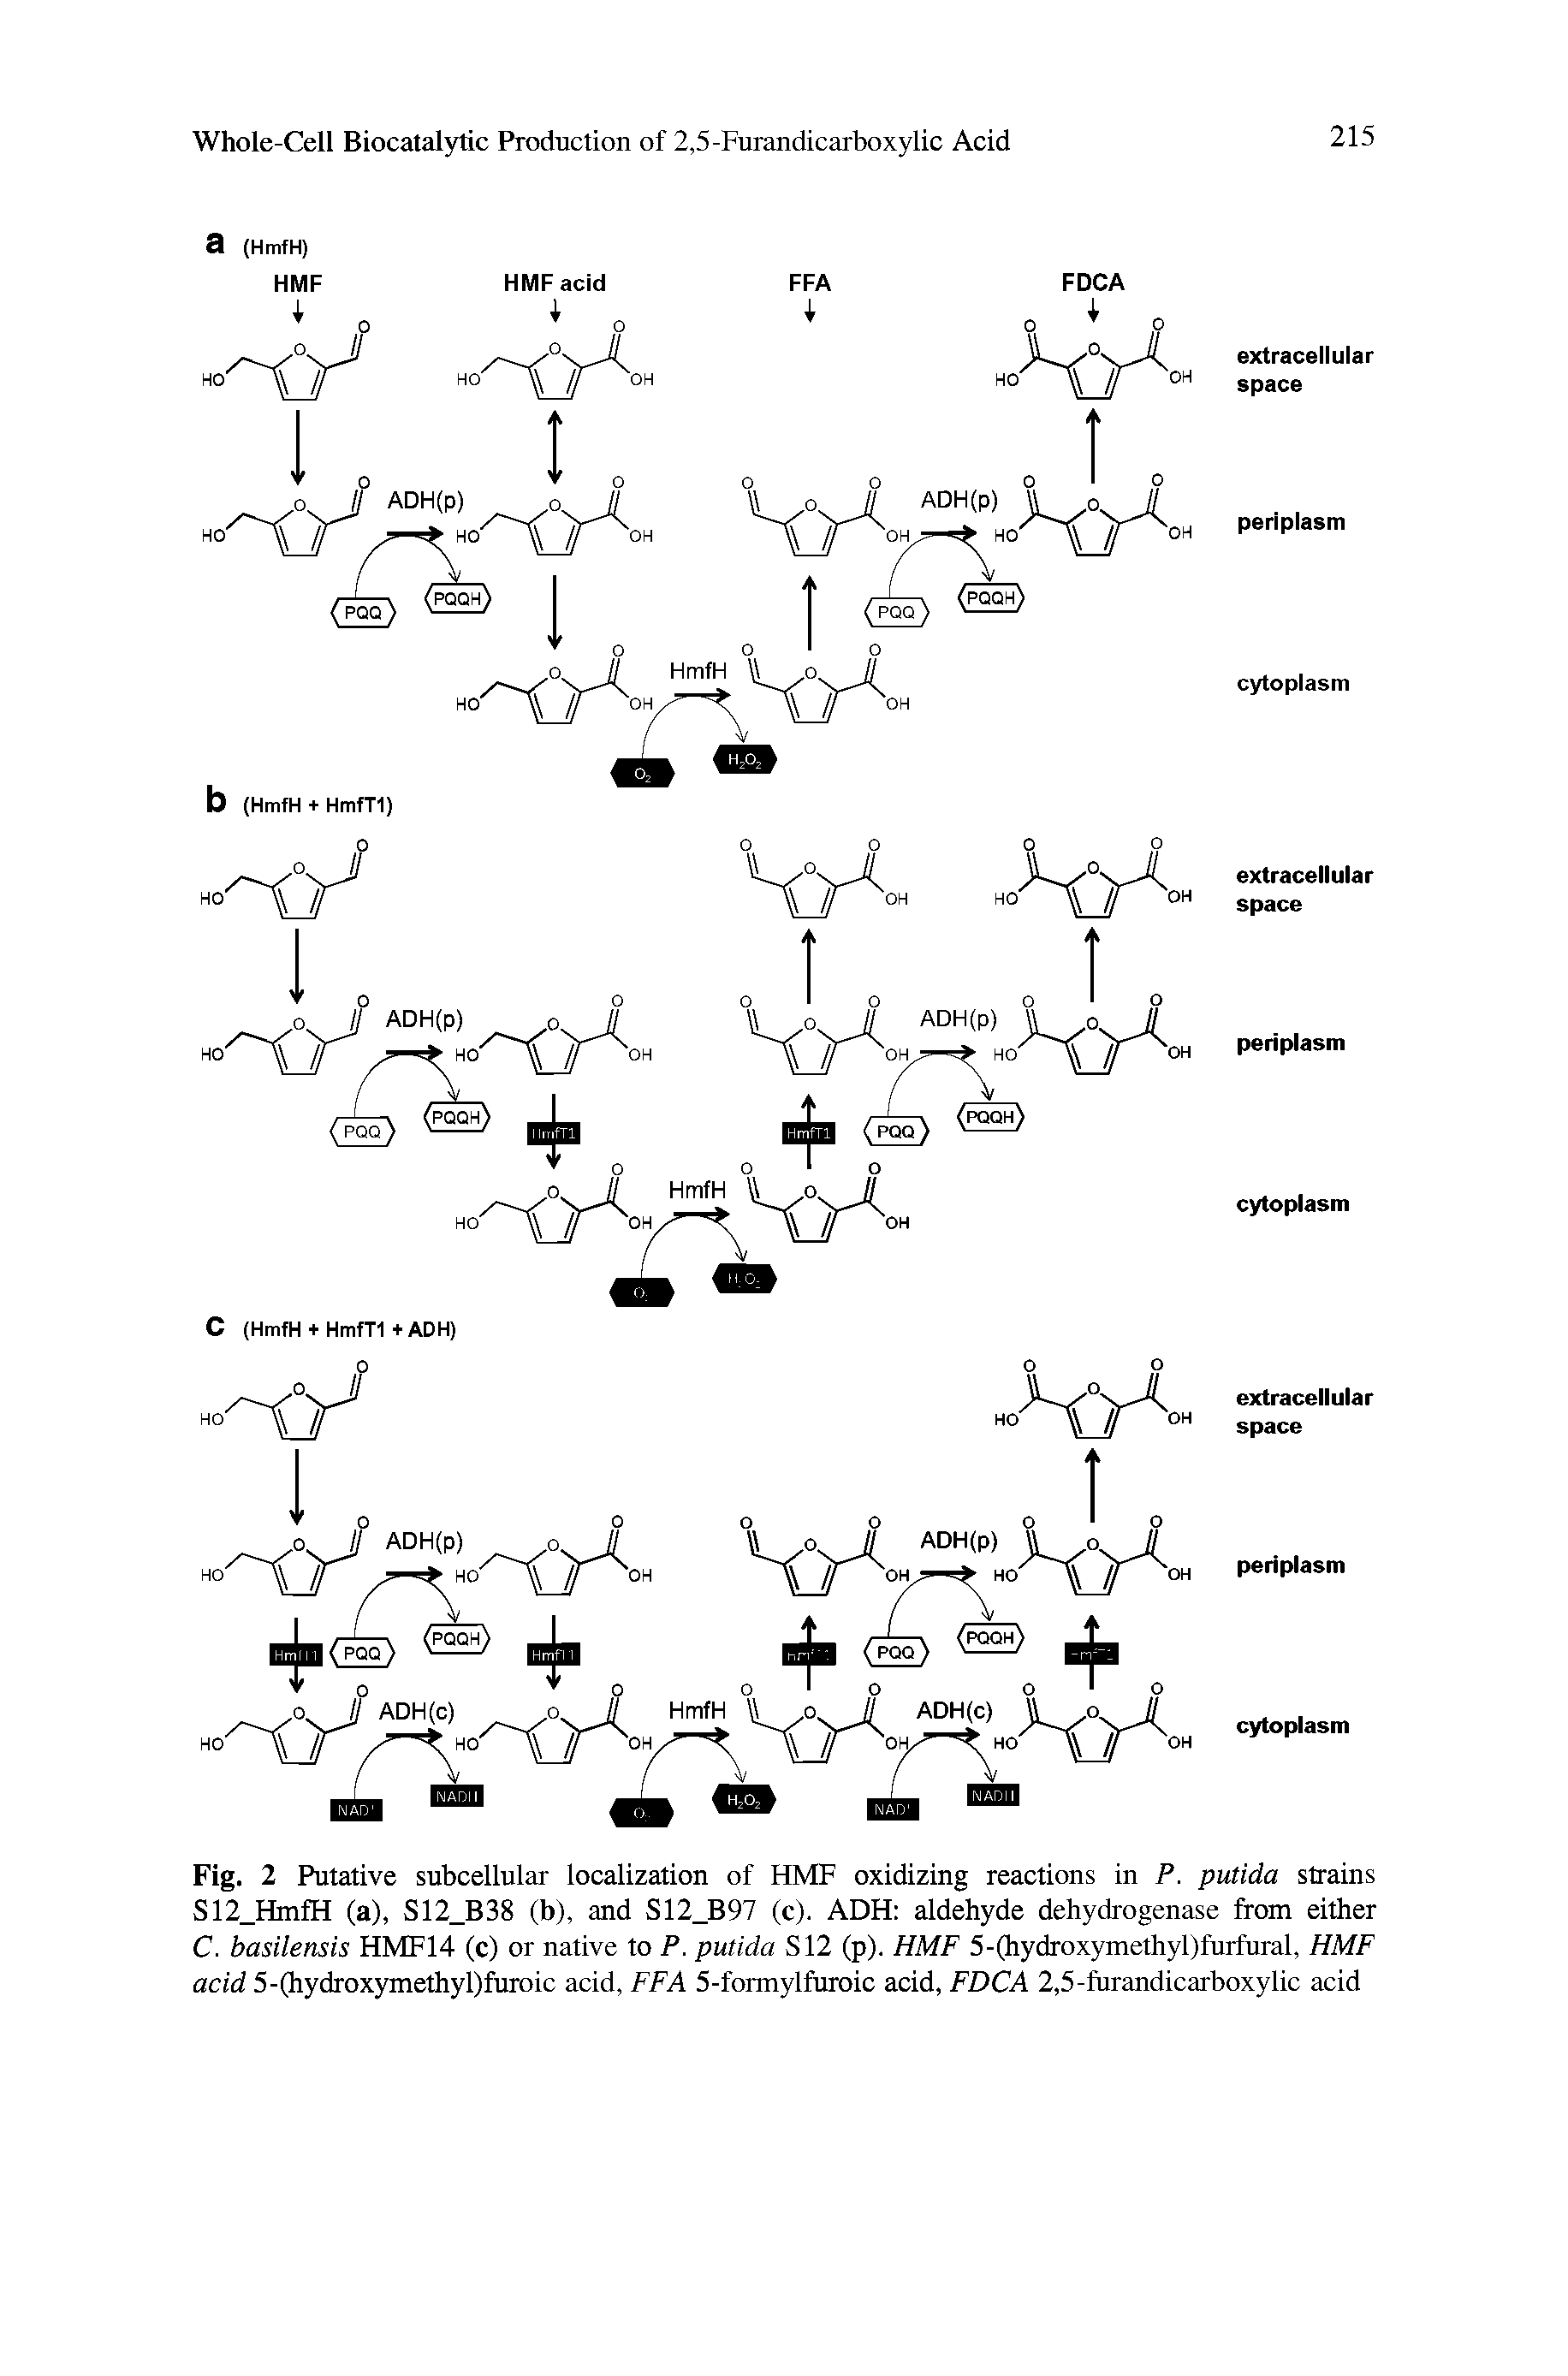 Fig. 2 Putative subcellular localization of HMF oxidizing reactions in P. putida strains S12 HmfH (a), S12 B38 (b), and S12 B97 (c). ADH aldehyde dehydrogenase from either C. basilensis HMF14 (c) or native to P. putida S12 (p). HMF 5-(hydroxymethyl)furfural, HMF acid 5-(hydroxymethyl)furoic acid, FFA 5-formylfuroic acid, FDCA 2,5-furandicarboxylic acid...